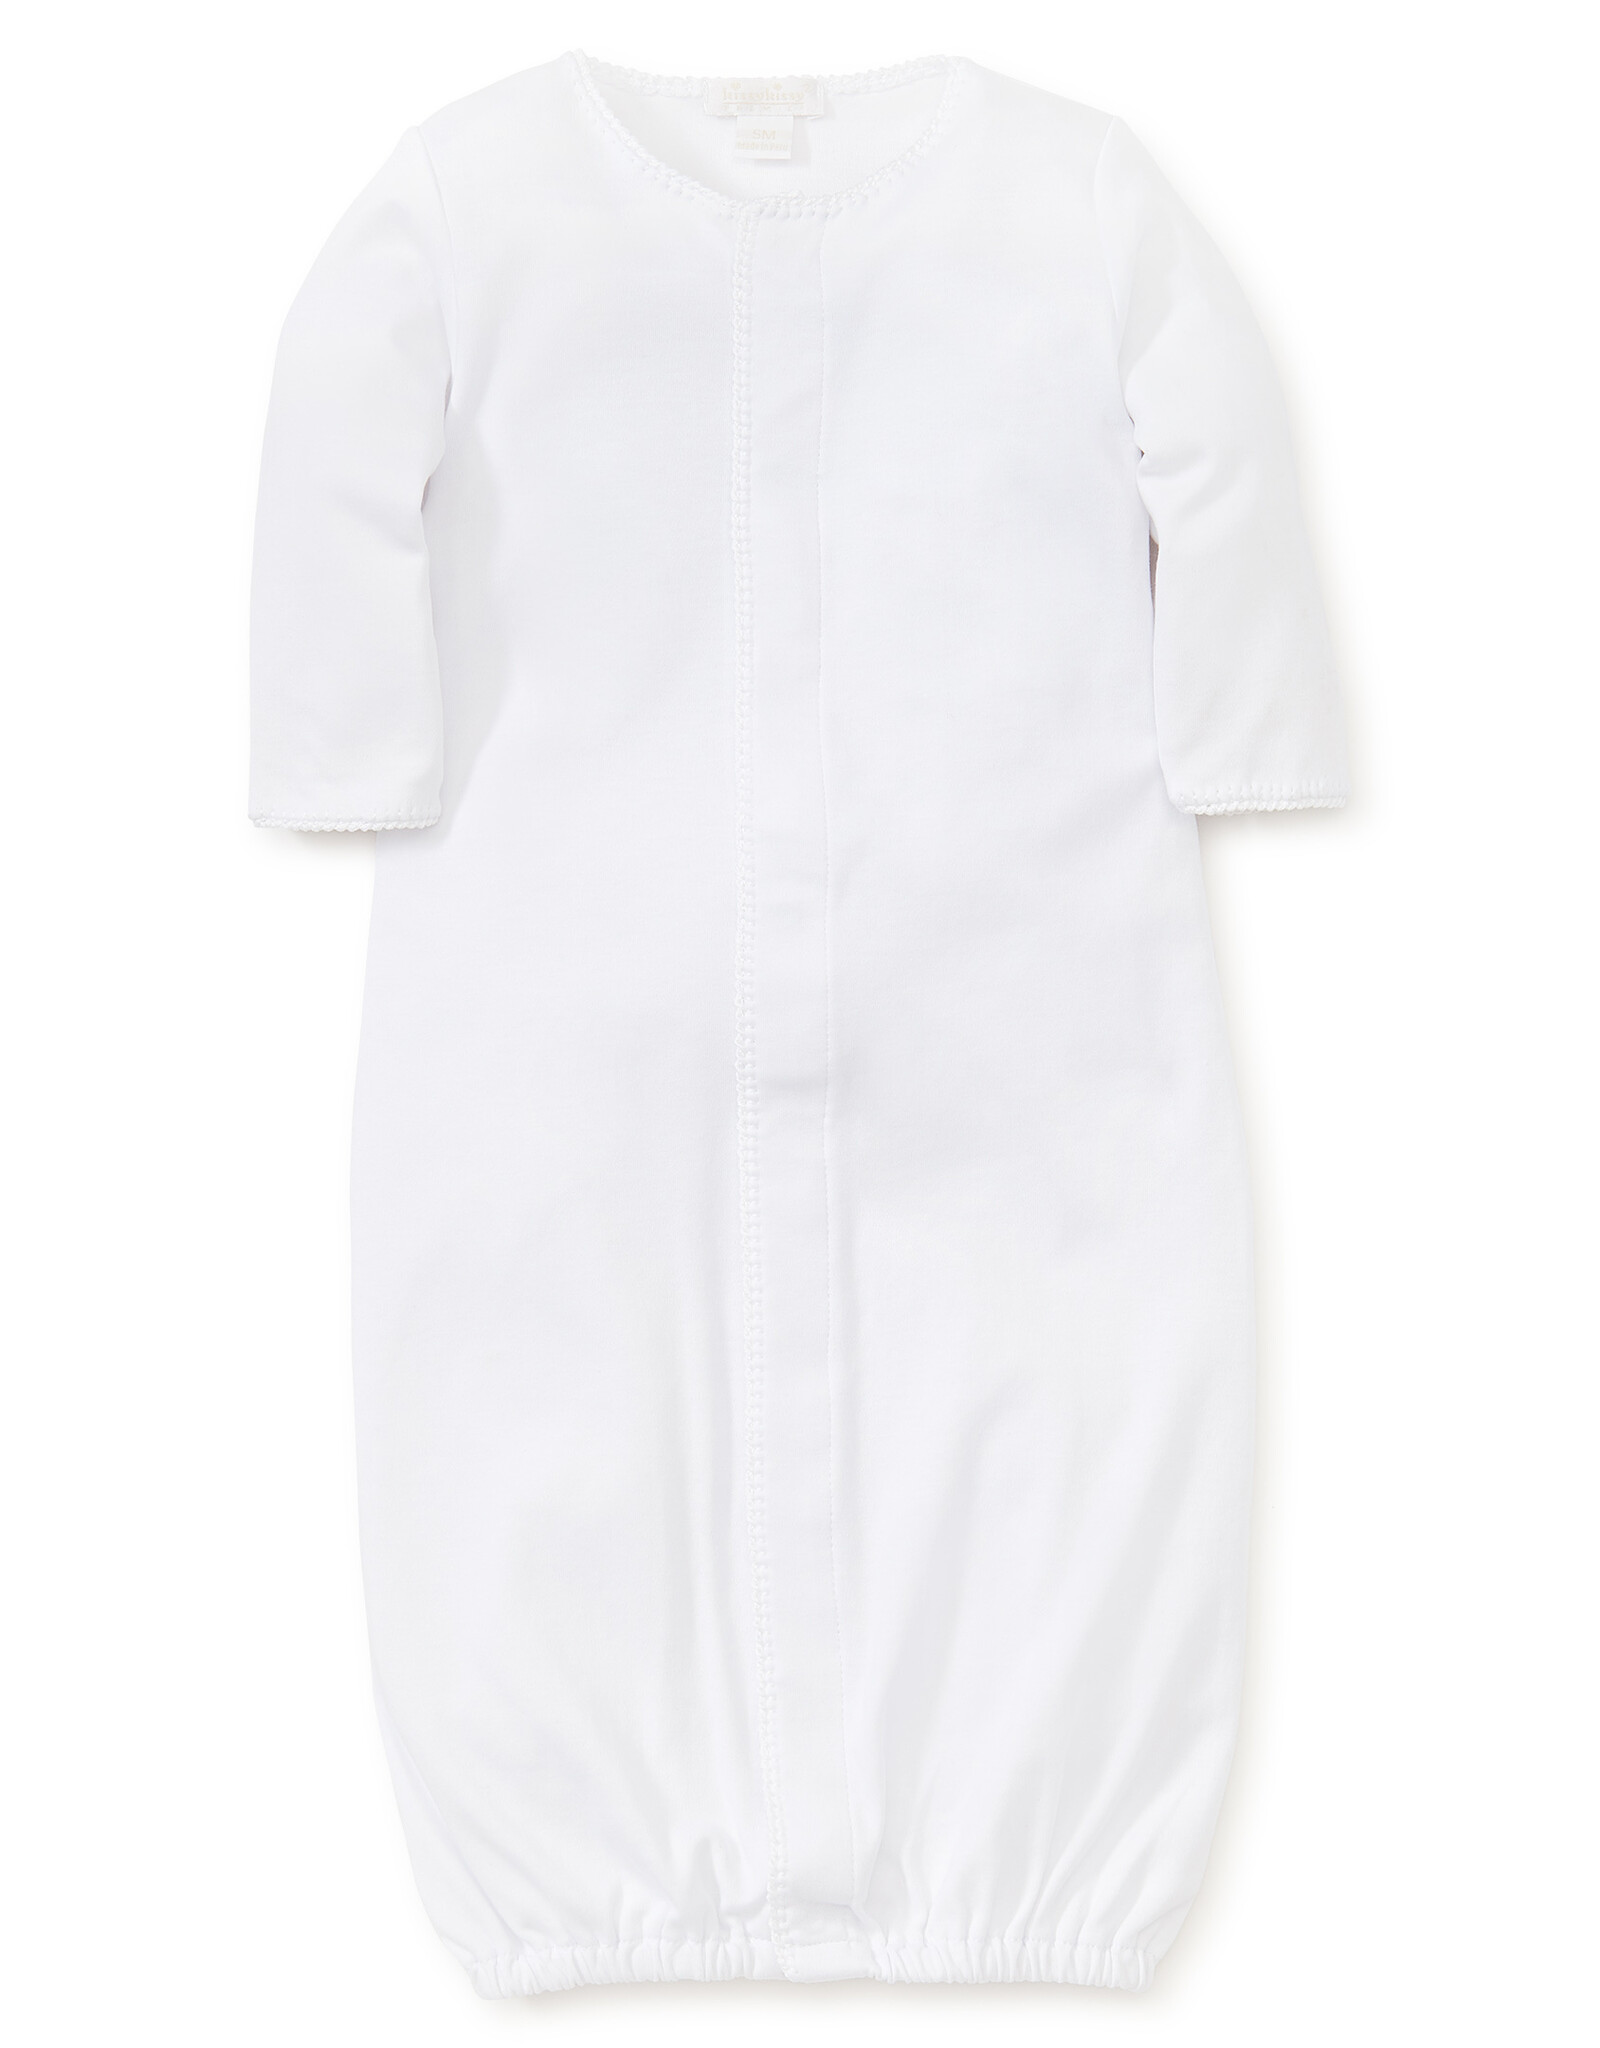 Kissy Kissy White Premier Basics Converter Gown with White Trim